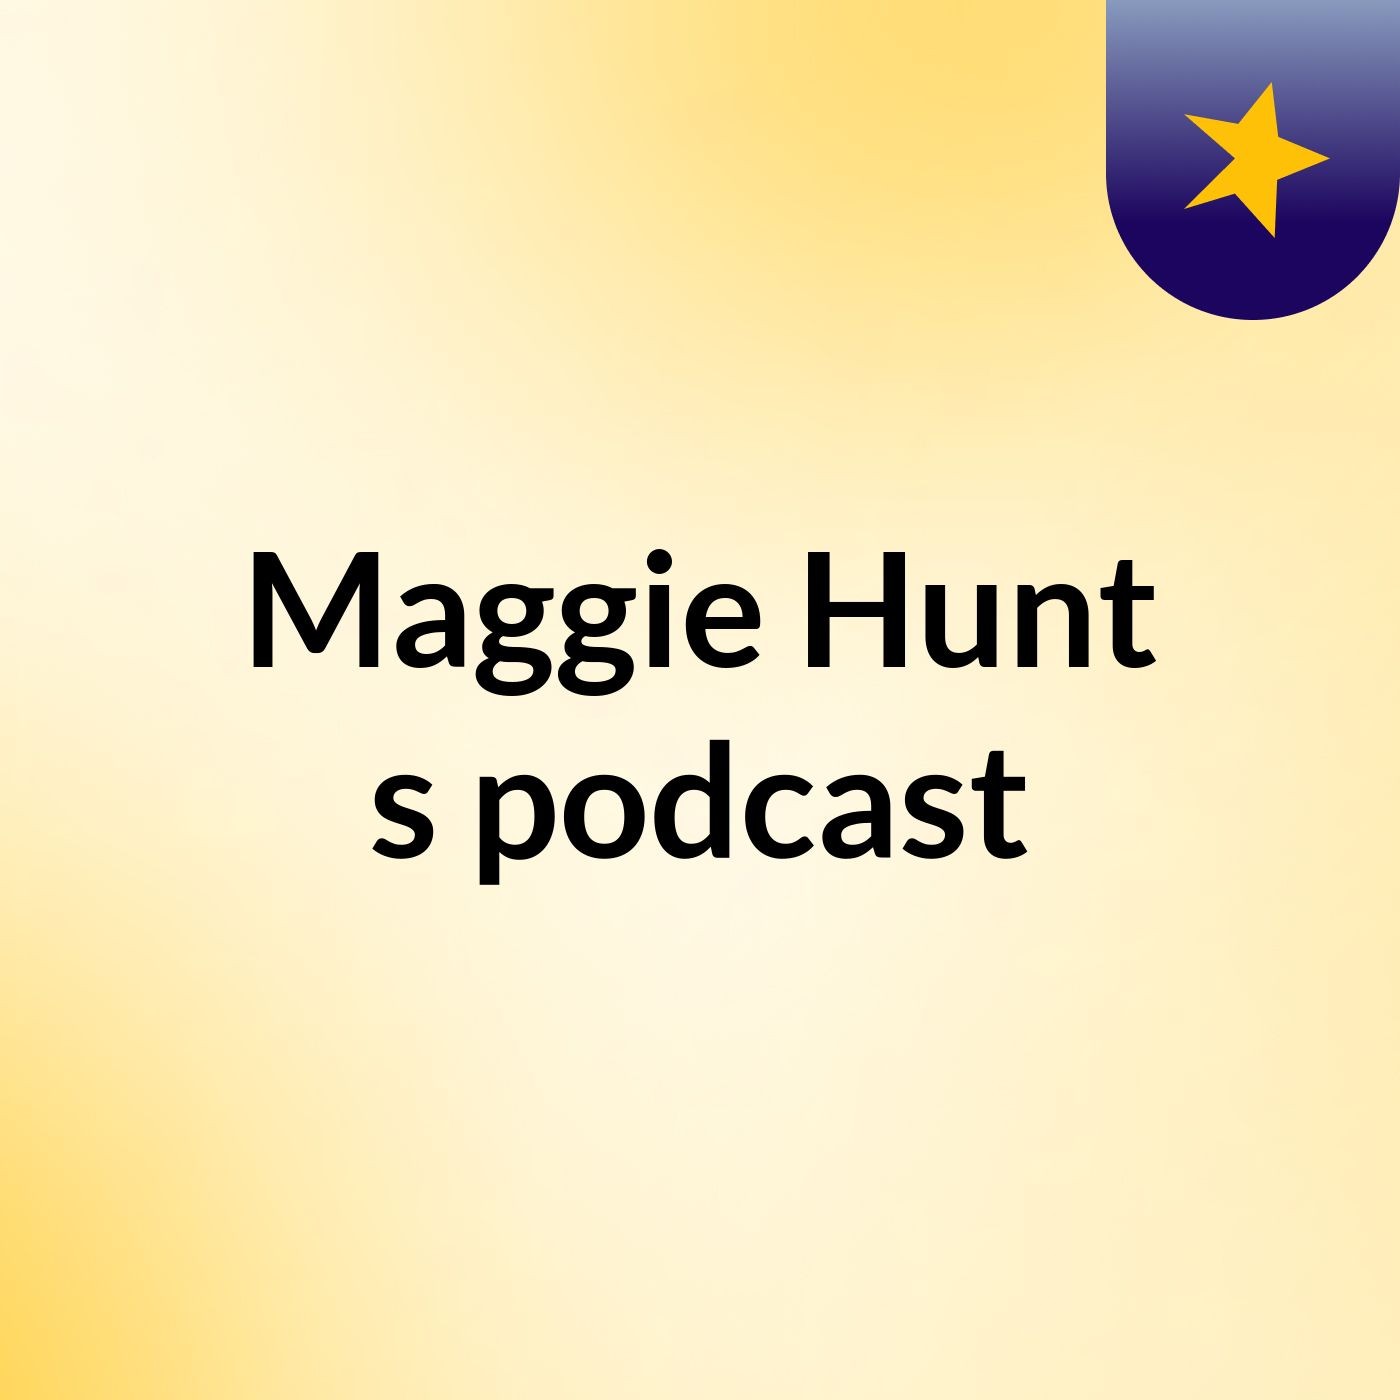 Maggie Hunt's podcast